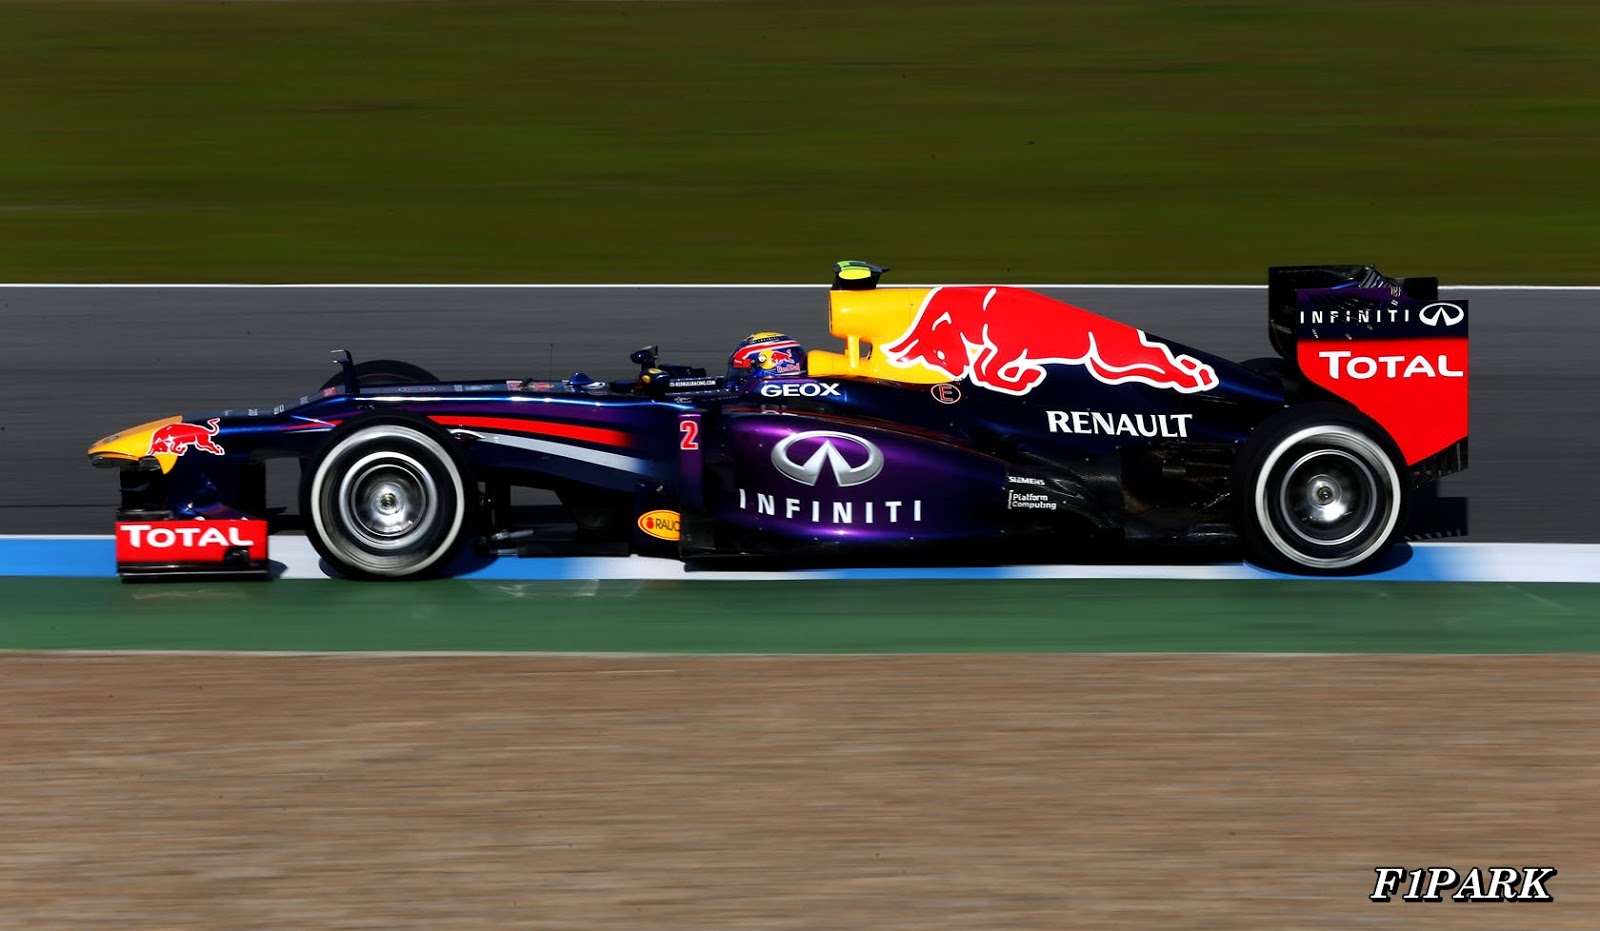 Onyc S1600 Mark Webber Red Bull Racing Wallpaper HD F1park Jpg